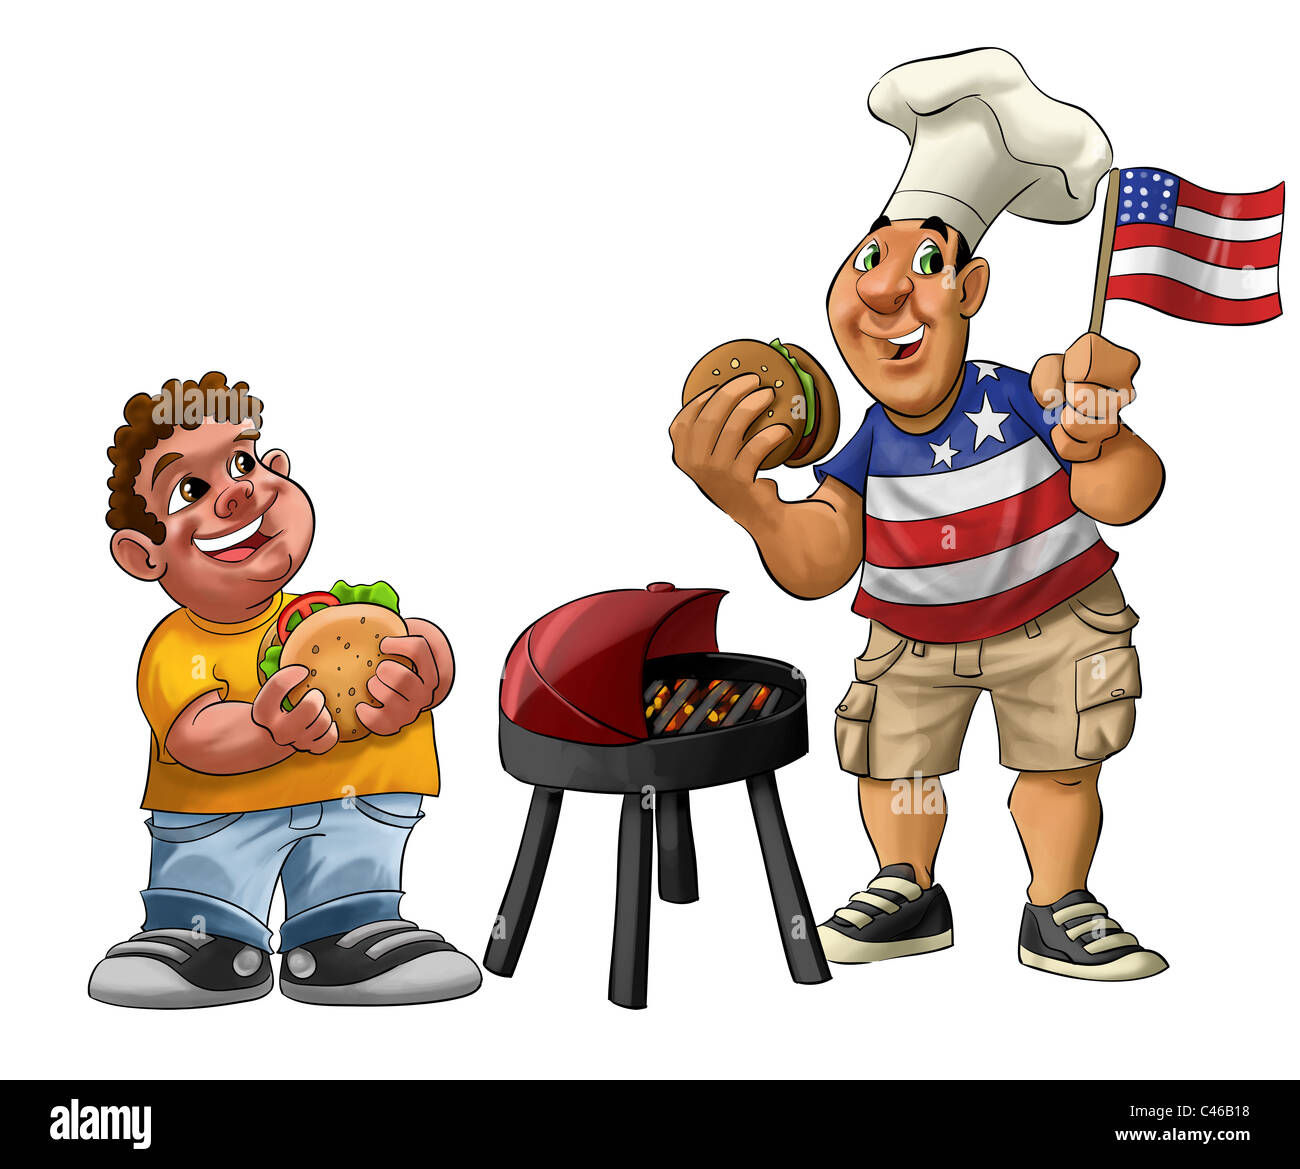 fat guy eating a hamburger with usa shirt and flag Stock Photo